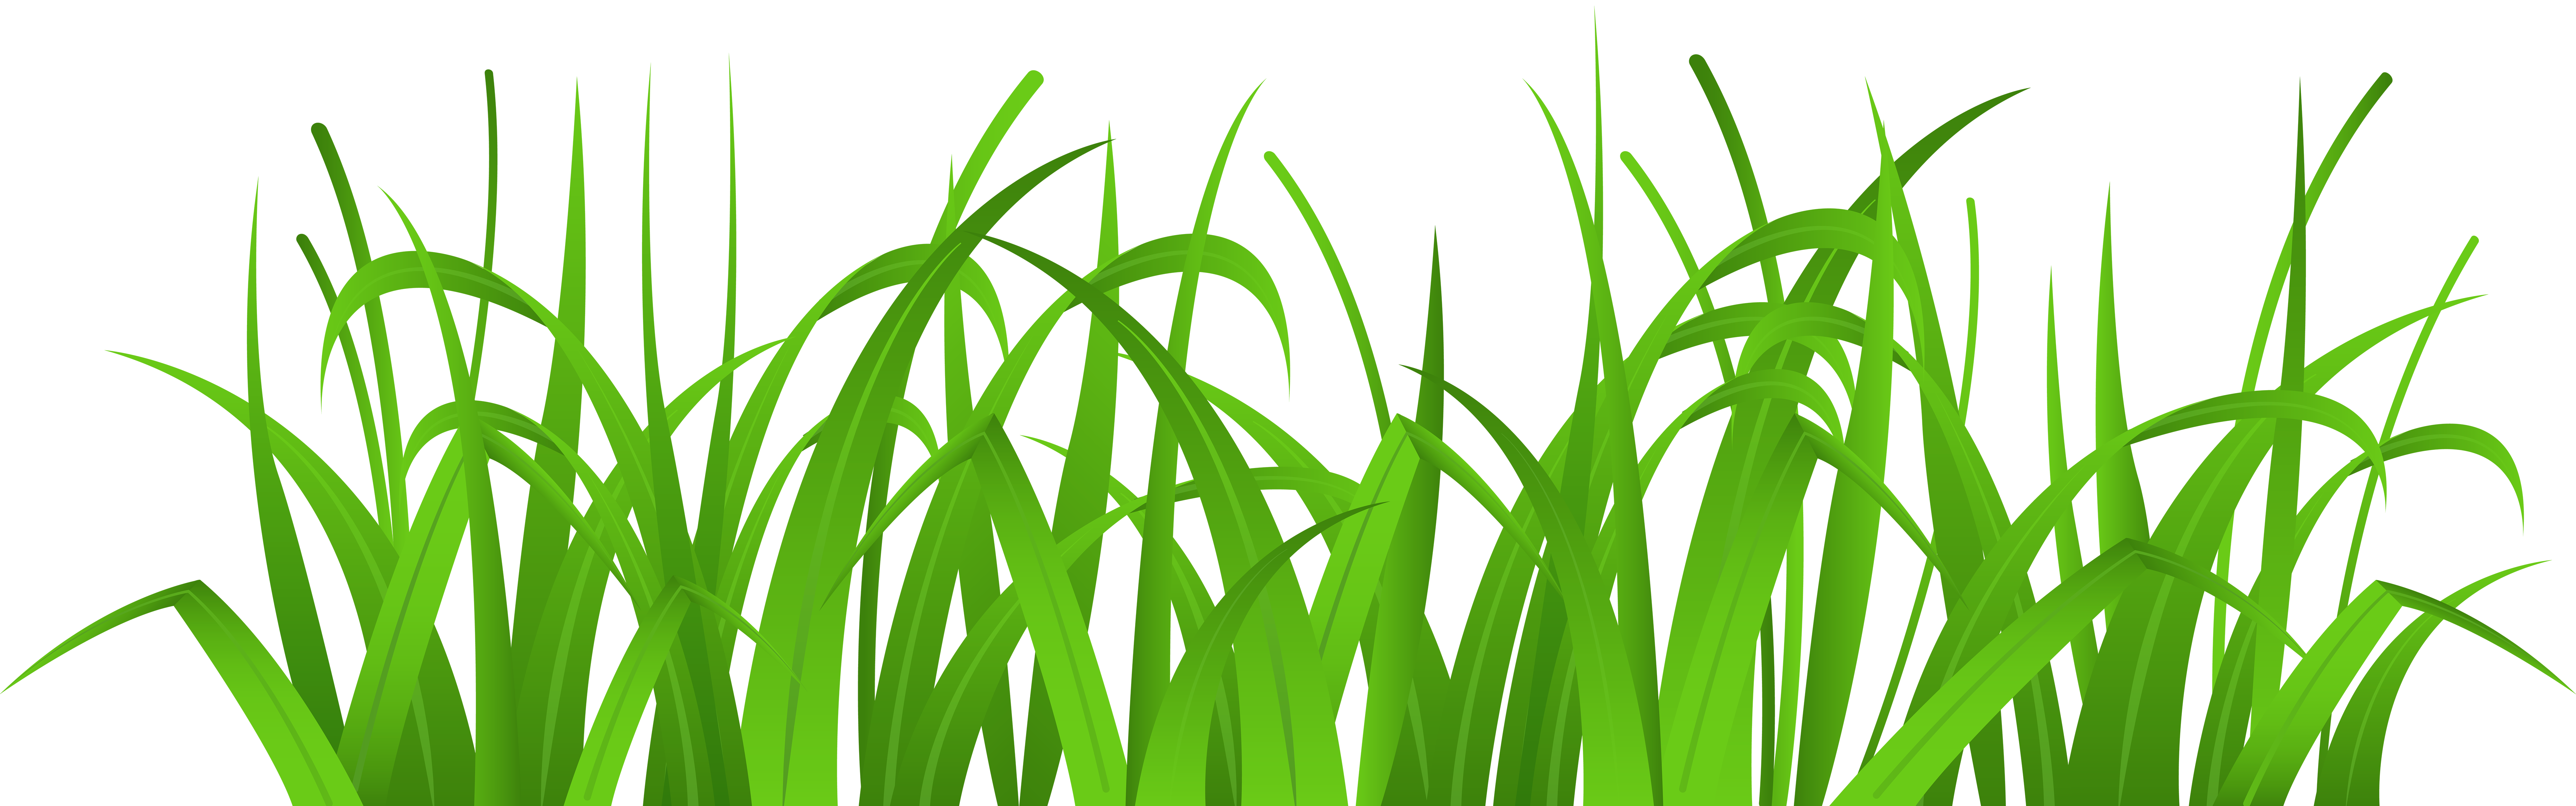 Grass Cover PNG Clip Art - Best WEB Clipart